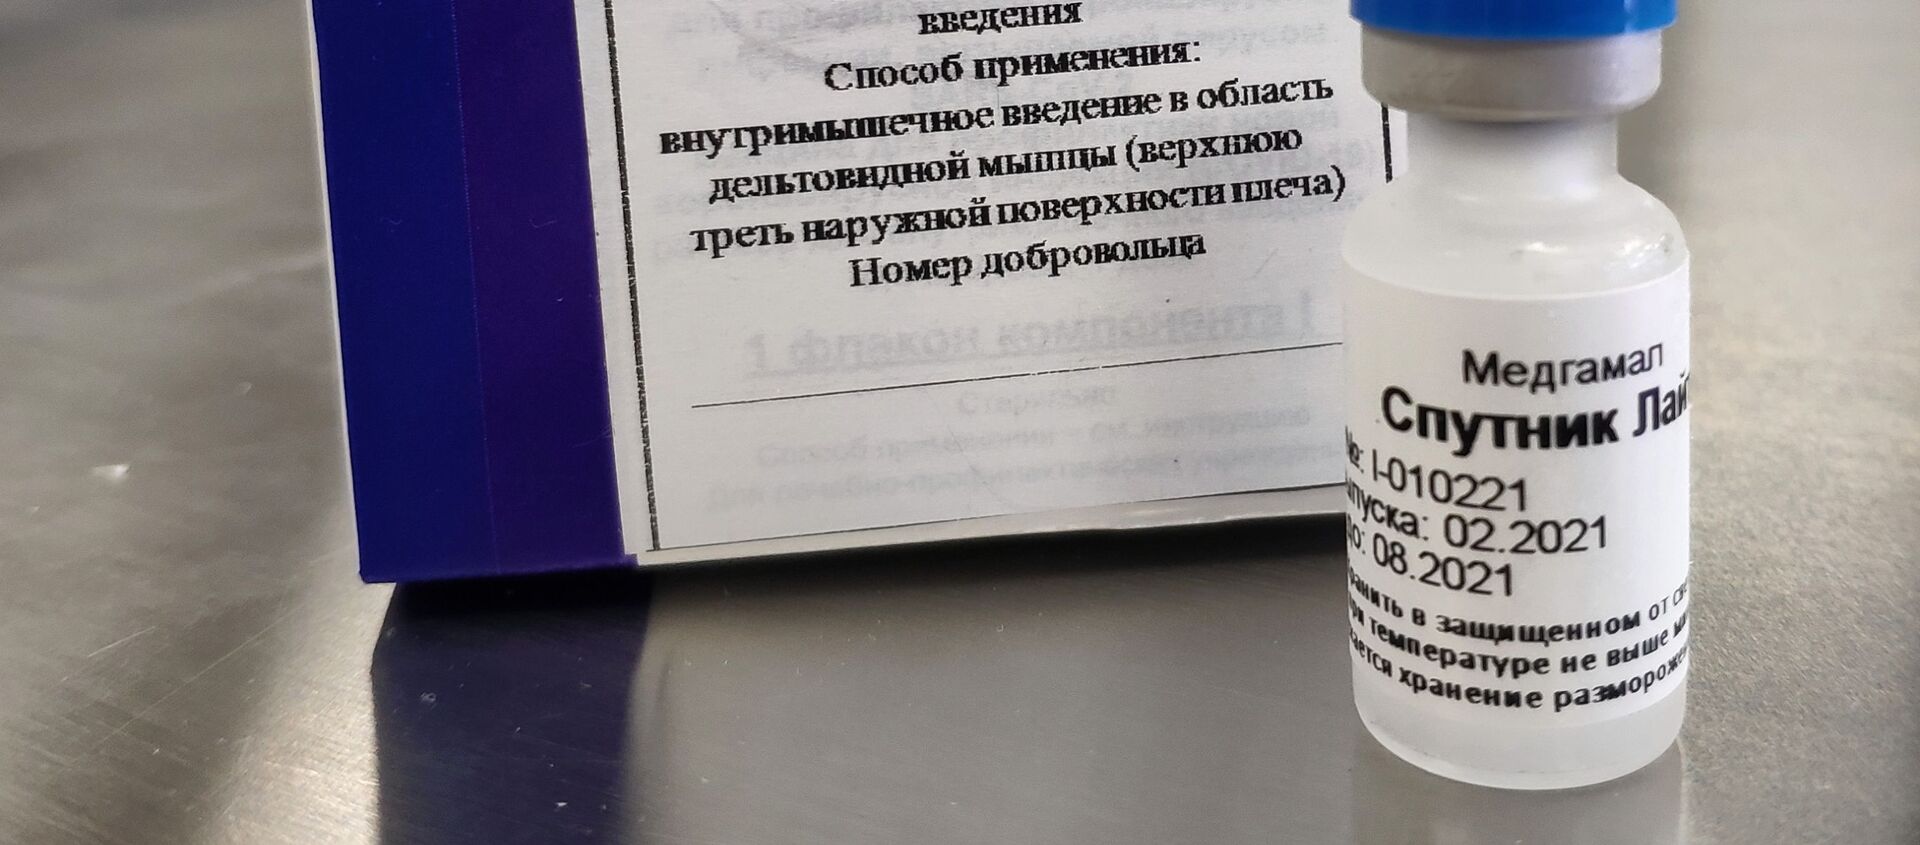 Упаковка однокомпонентной вакцины от COVID-19 Спутник Лайт - 俄罗斯卫星通讯社, 1920, 23.06.2021